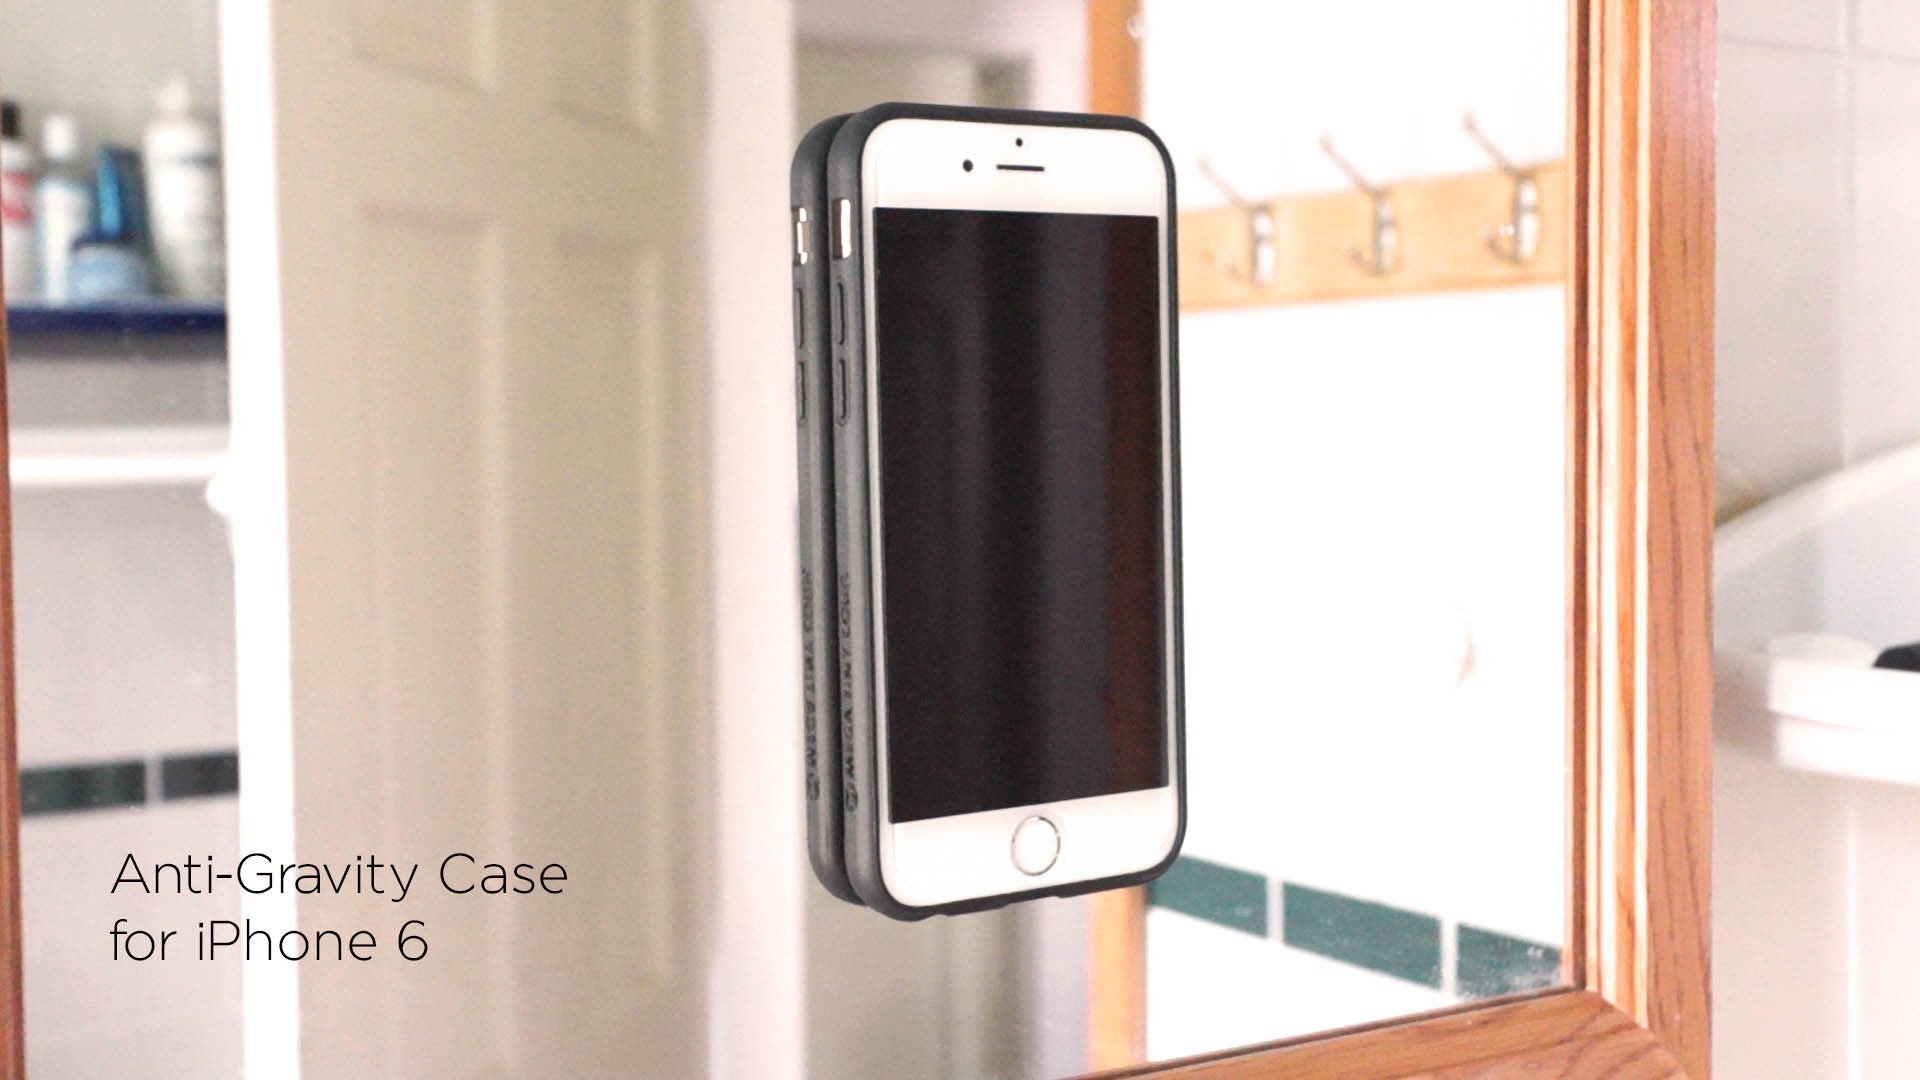 NANOK Anti-Gravity Phone Case - $14 A phone case that uses nano-material to stick to walls, glass, etc.